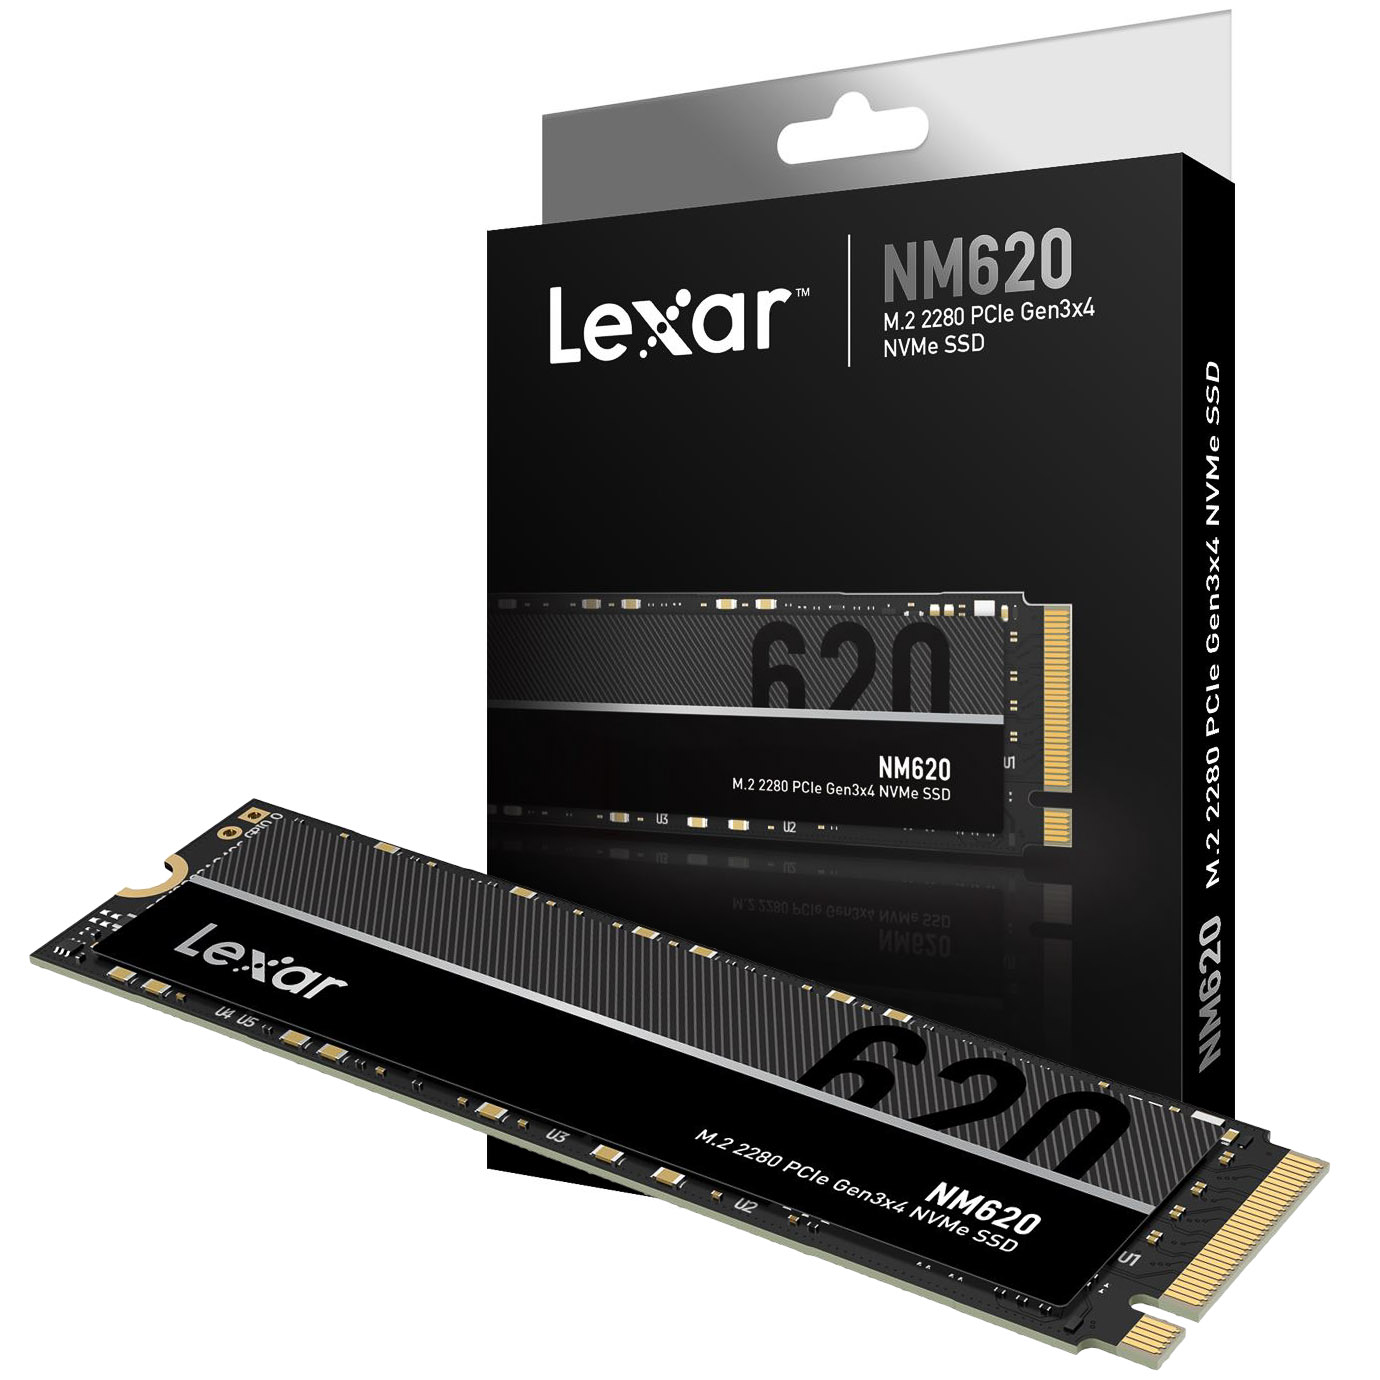 Lexar NM620 512GB NVMe PCIe 3.0 M.2 Solid State Drive (LNM620X512G-RNNNG)